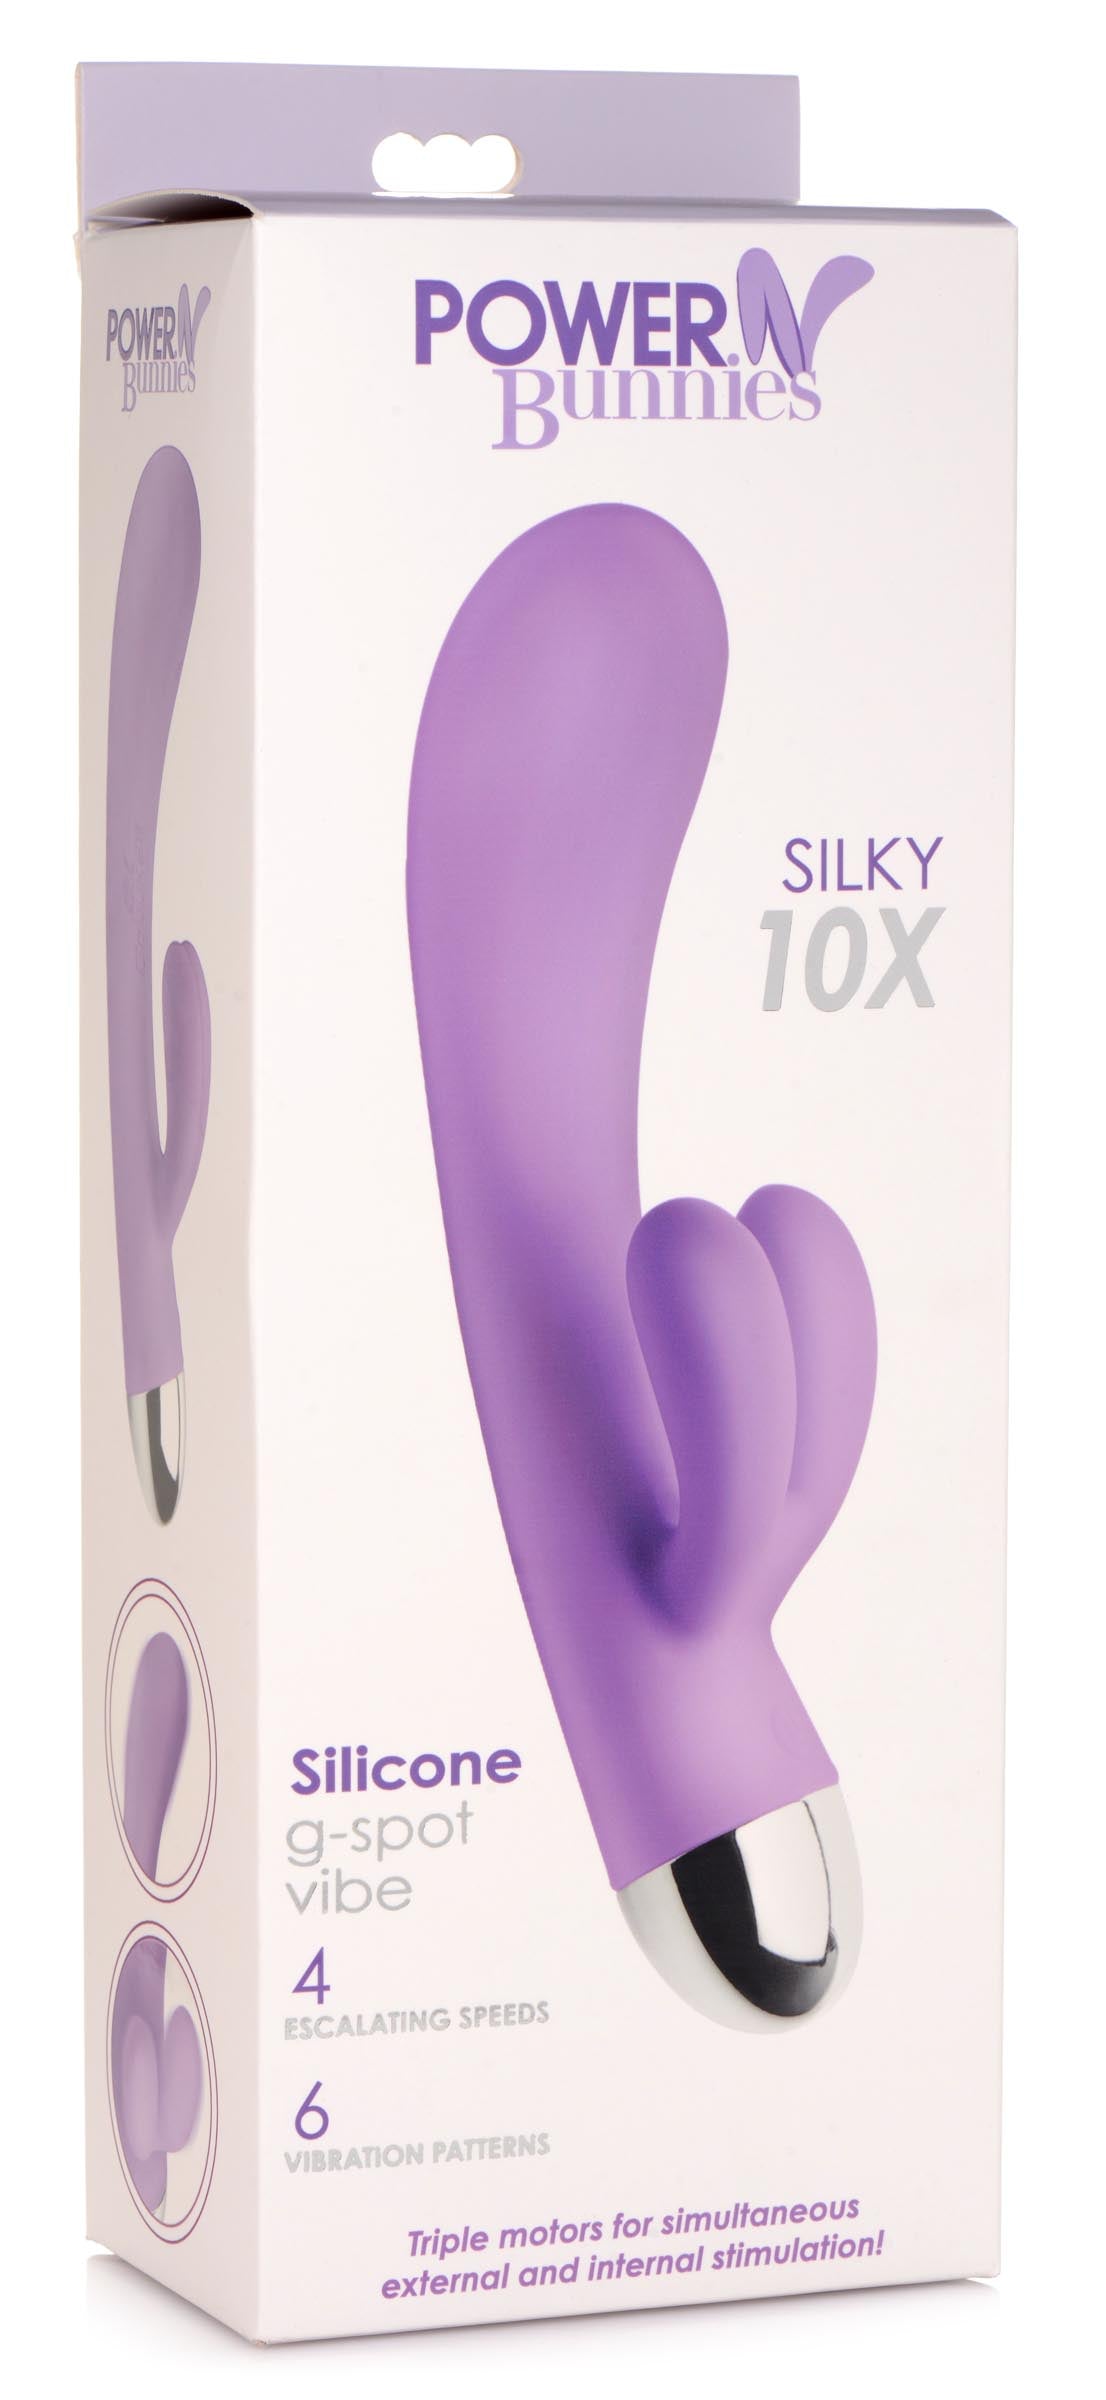 Silky 10x Silicone G-spot Vibrator